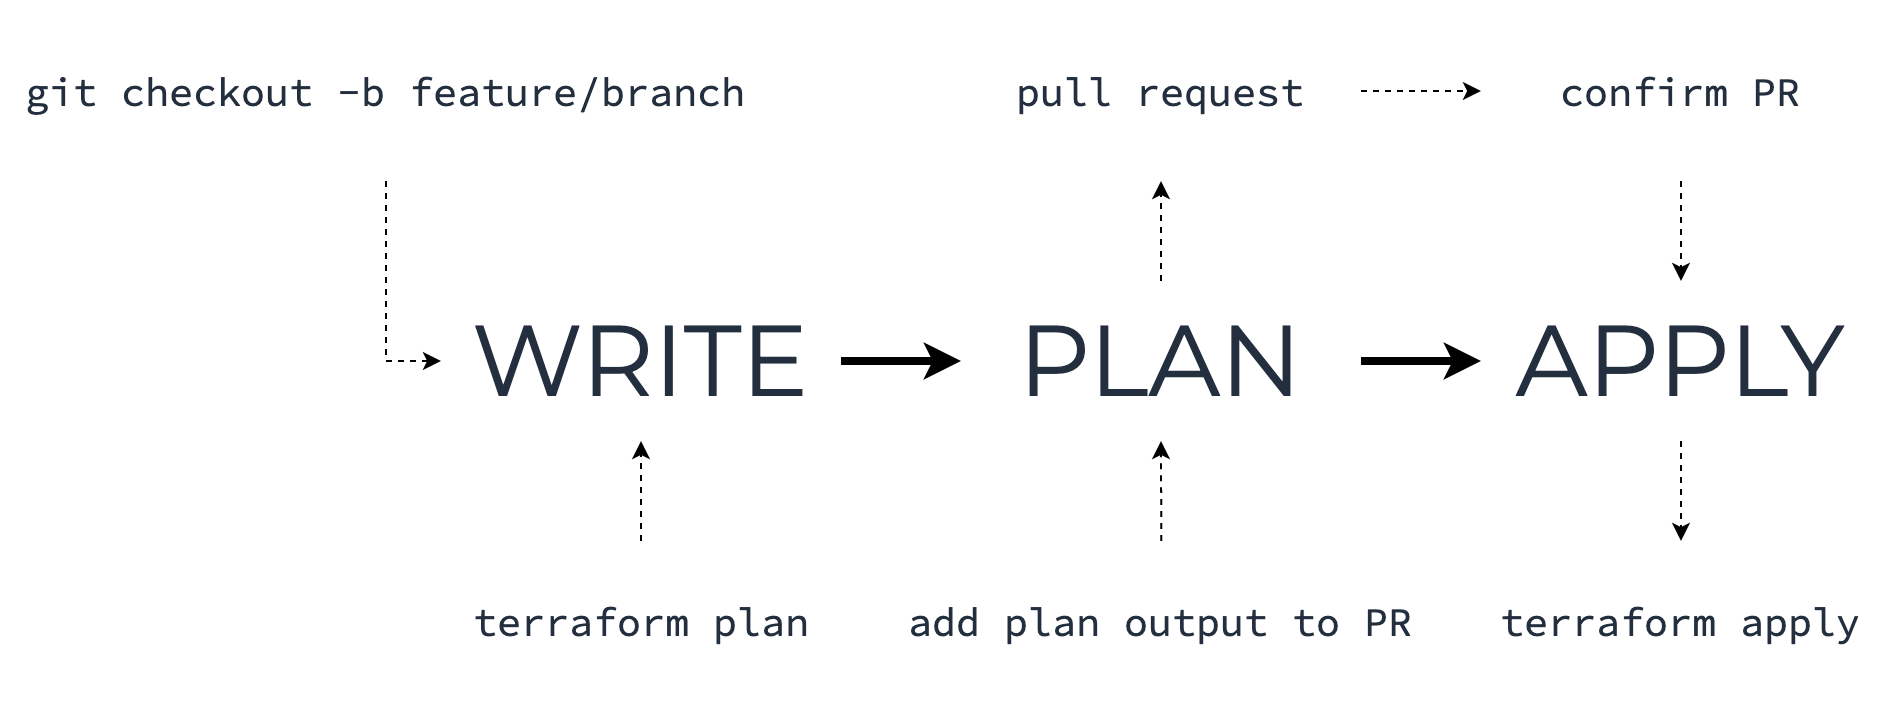 Git-based Terraform workflow in a team